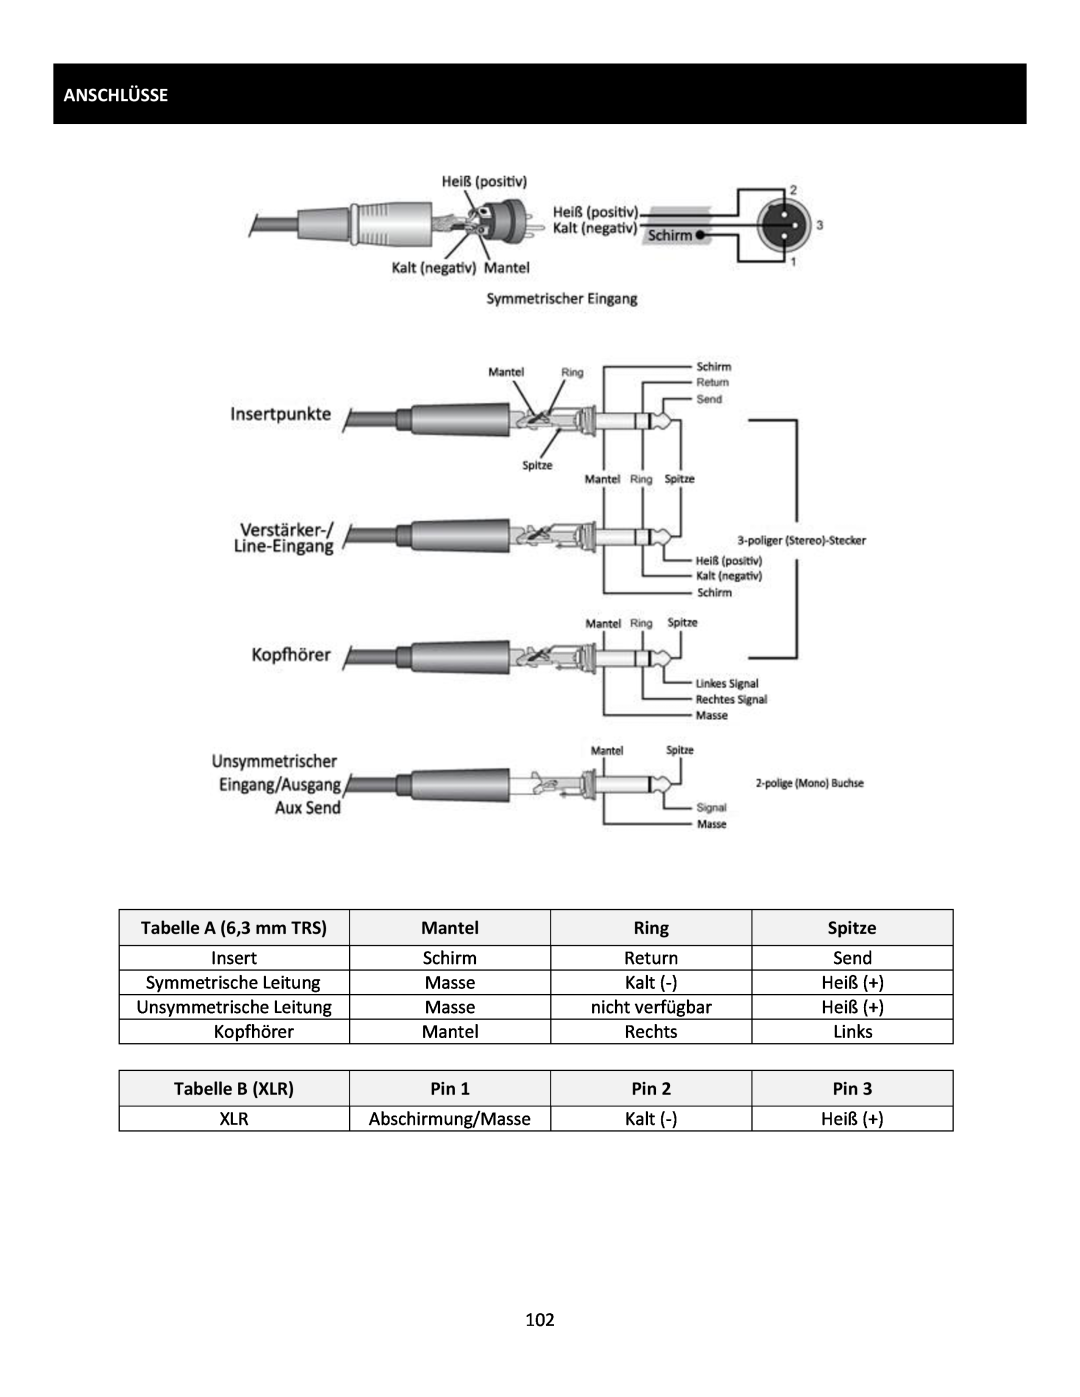 Cerwin-Vega CVM-1224FXUSB manual Anschlüsse, Tabelle A 6,3 mm TRS, Mantel, Ring, Spitze, Tabelle B XLR 